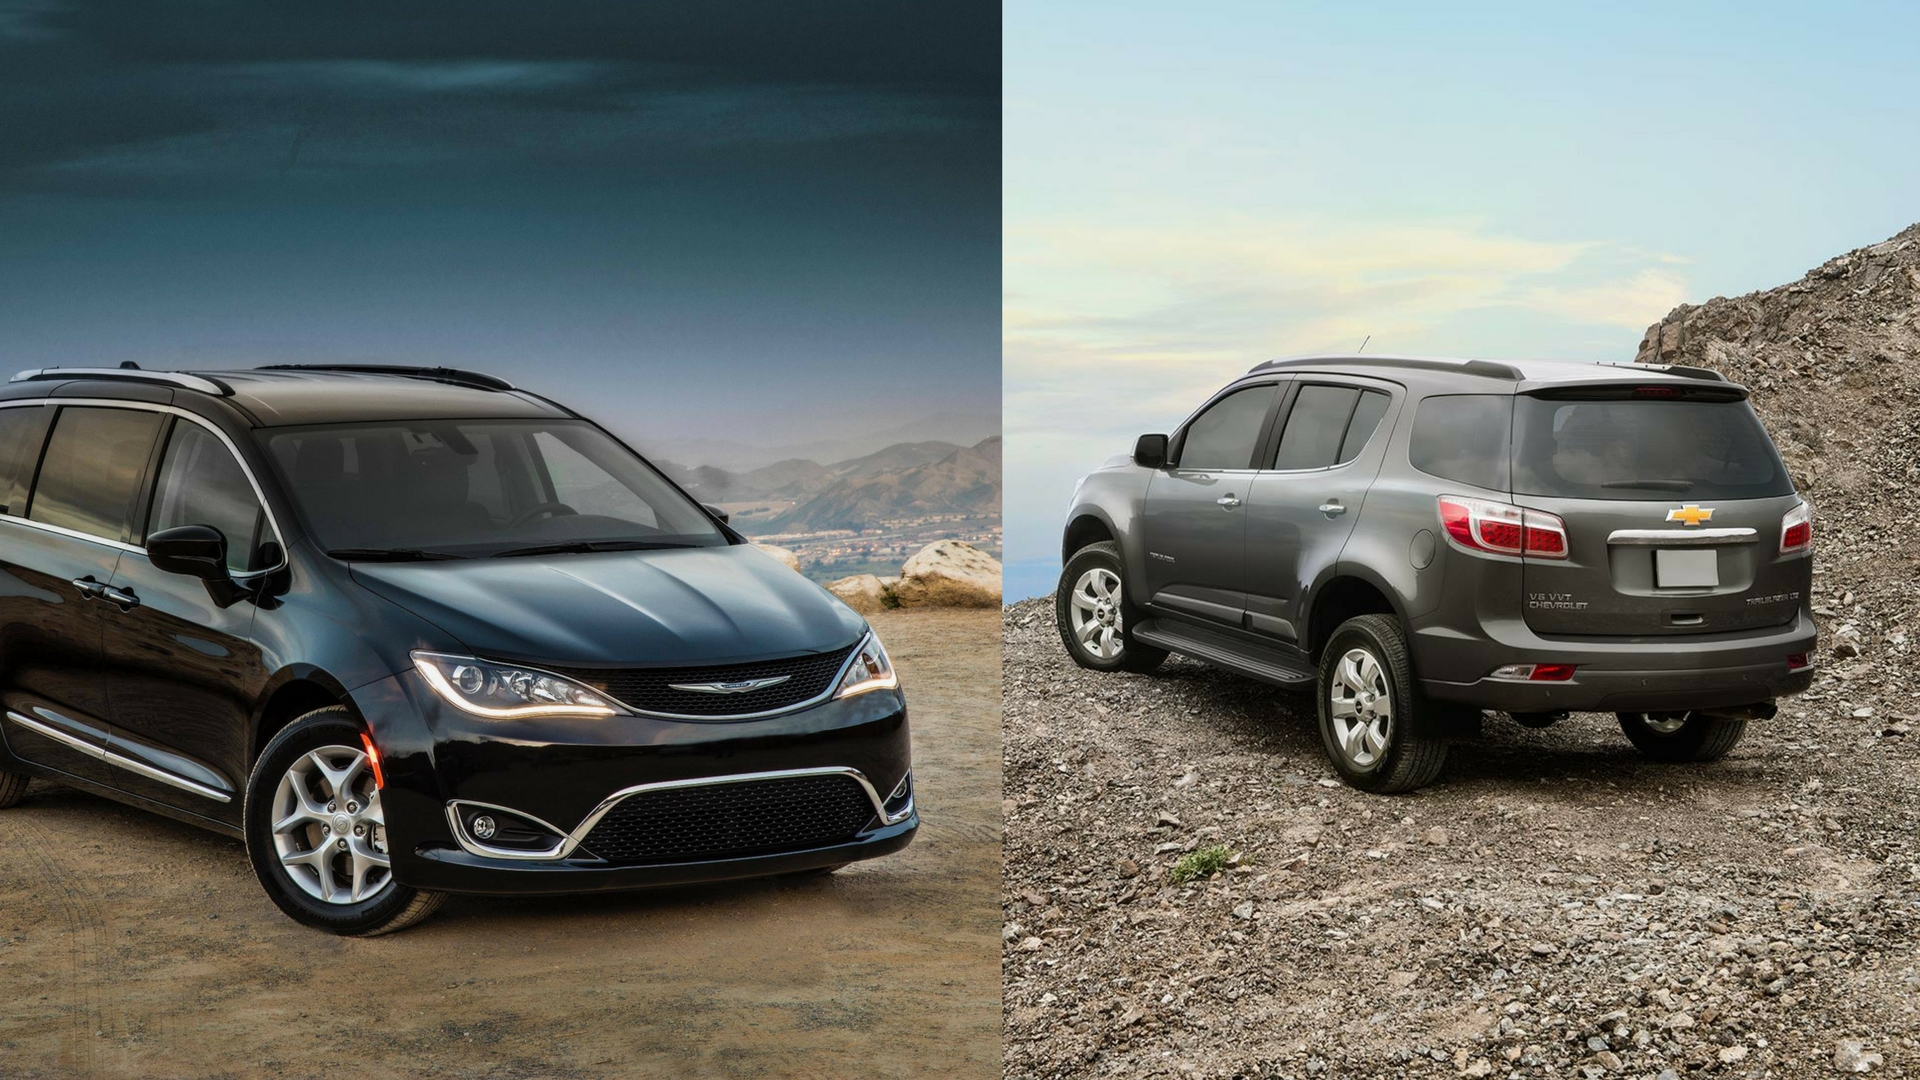 Luxury SUV vs minivan: Family travel comfort